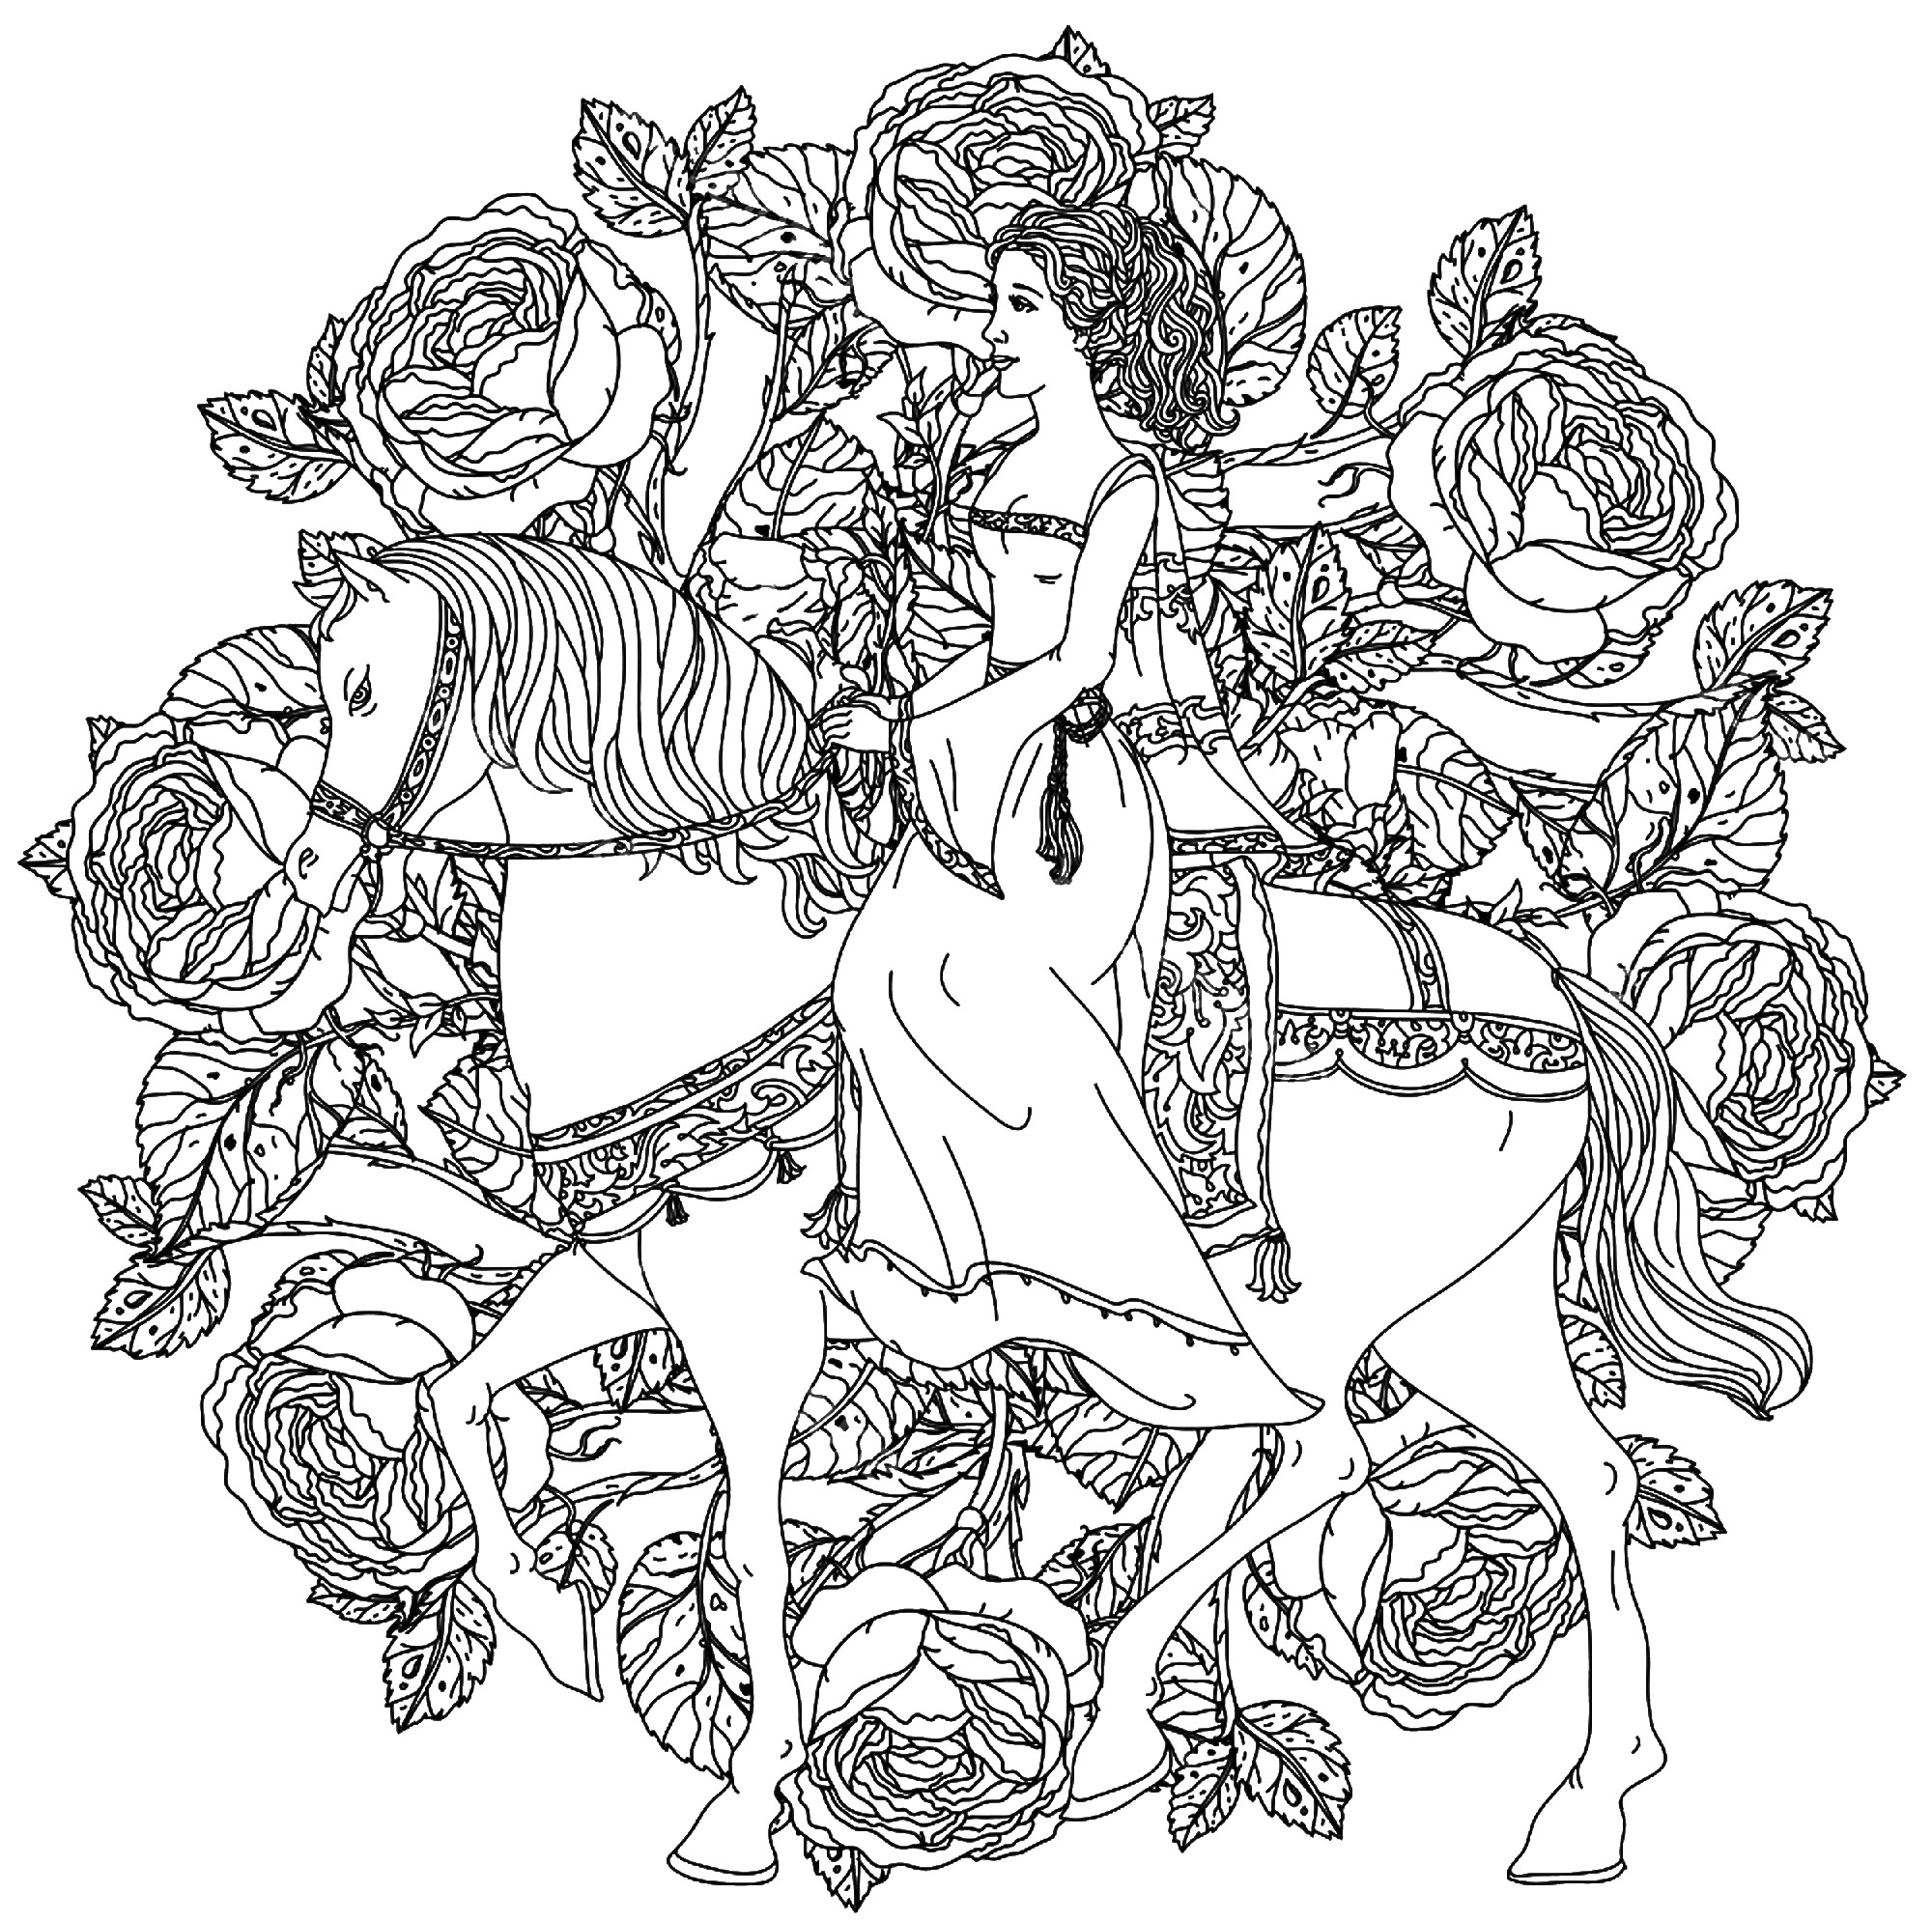 Una princesa a caballo en un magnífico mandala de flores